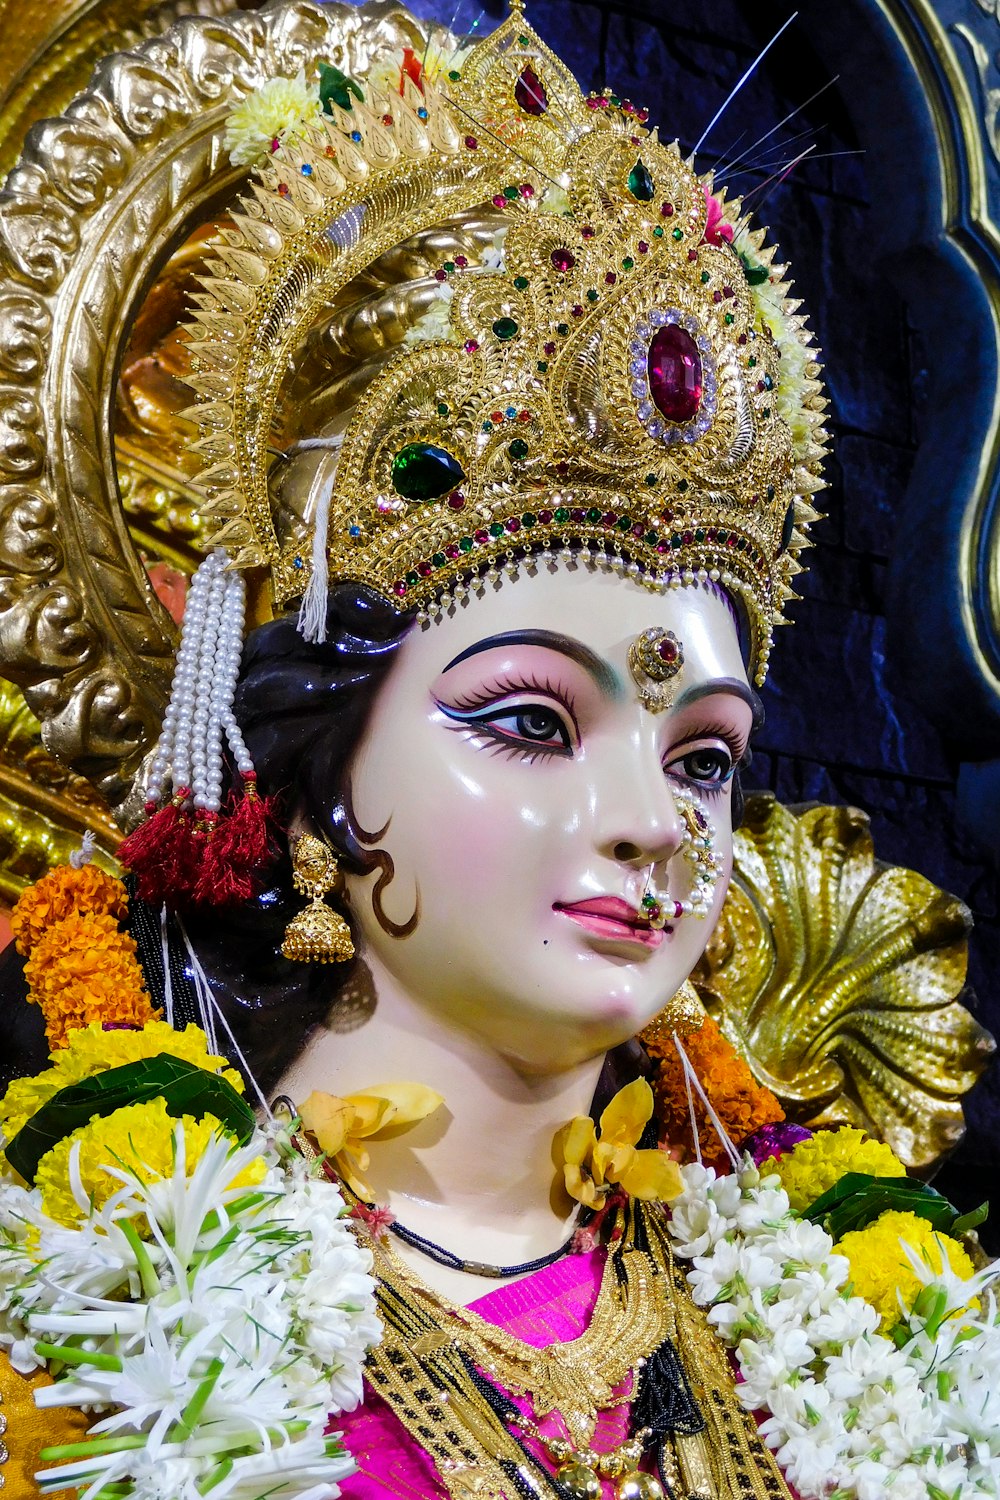 gold and white hindu deity figurine